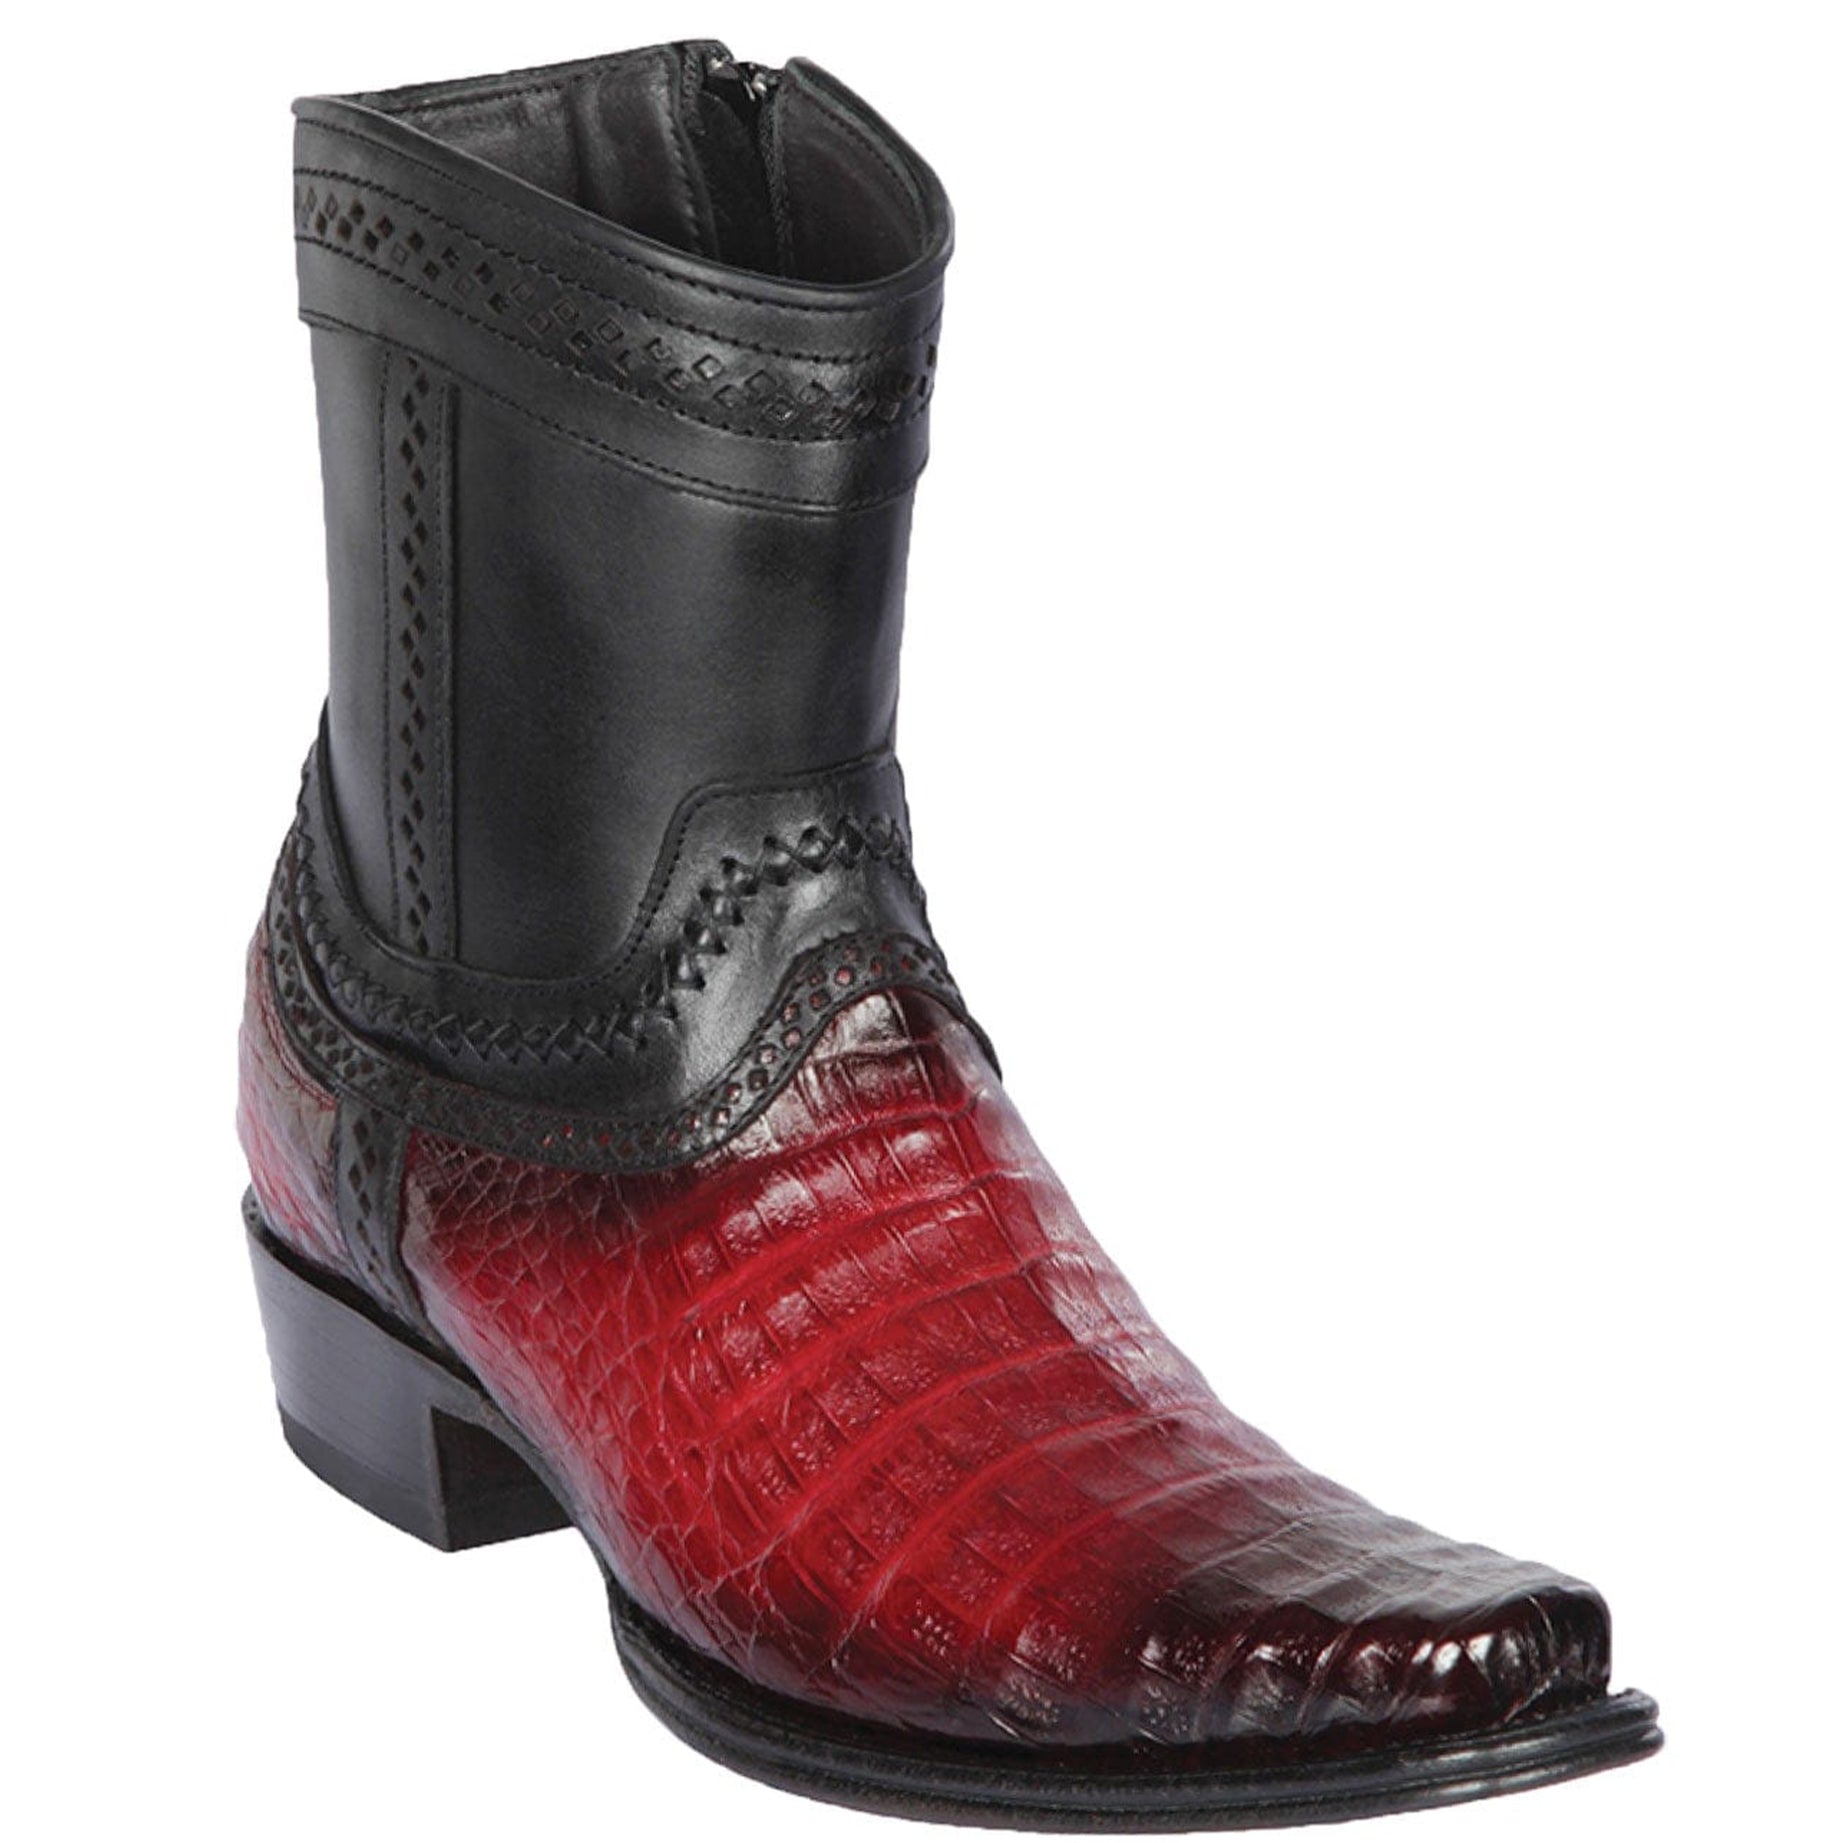 Caiman Belly Short Cowboy Boots Burgundy - Los Altos Boots